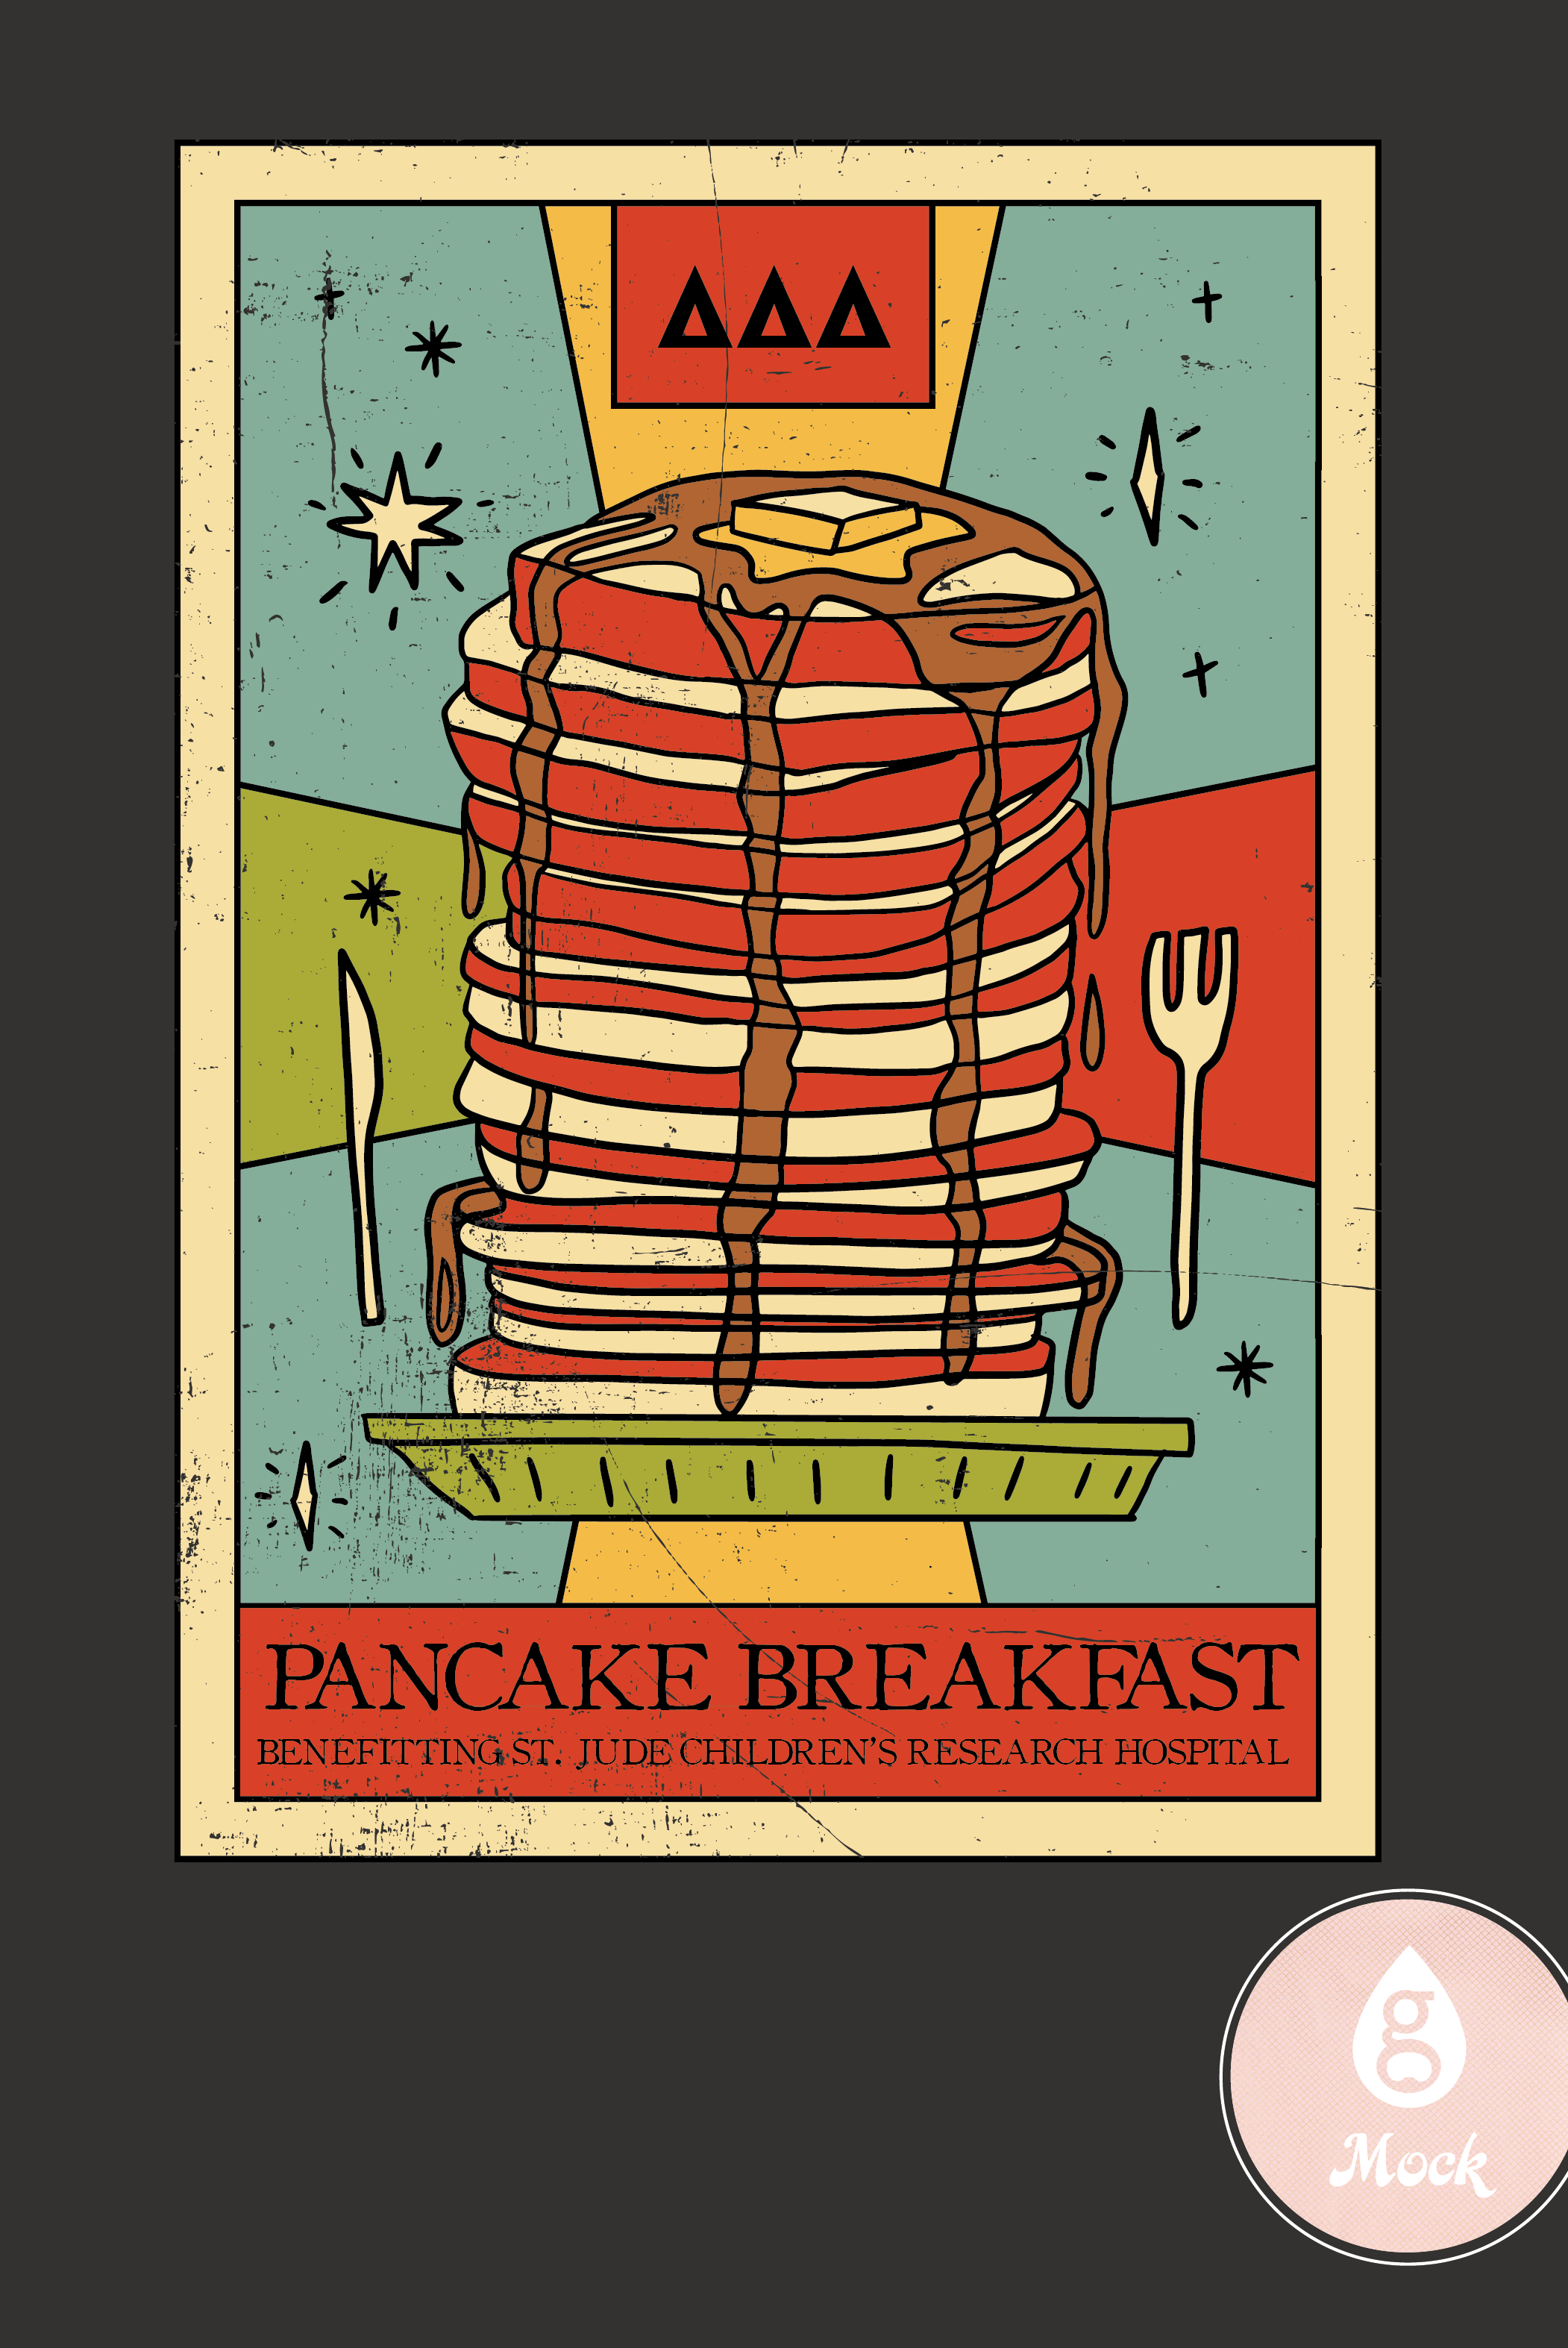 DDD_philanthropy_pancake breakfast-01.png